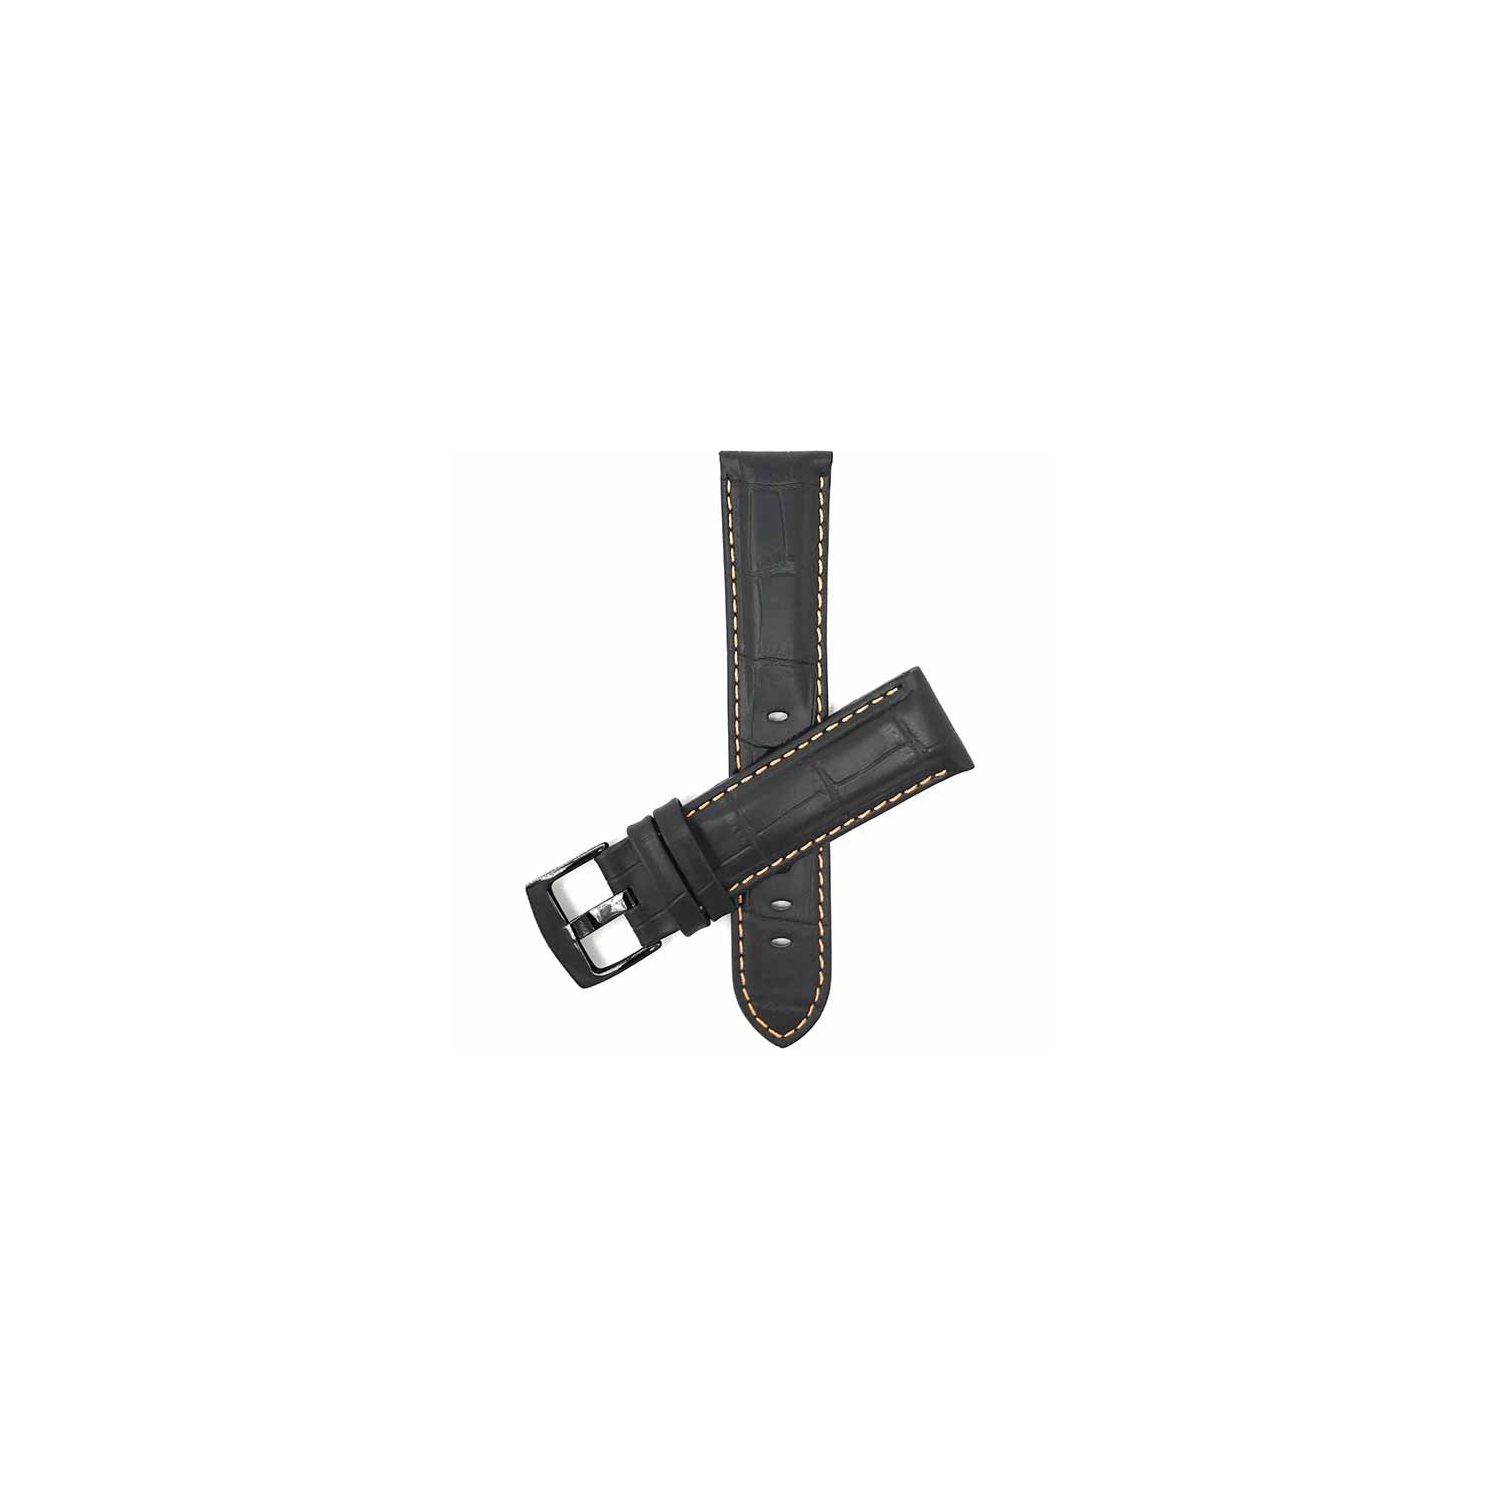 Bandini Mens Leather Alligator Pattern, Stitch Smart Watch Band Strap For Withings Nokia Steel HR 40mm, Horizon - 20mm, Black / Orange / Black Buckle